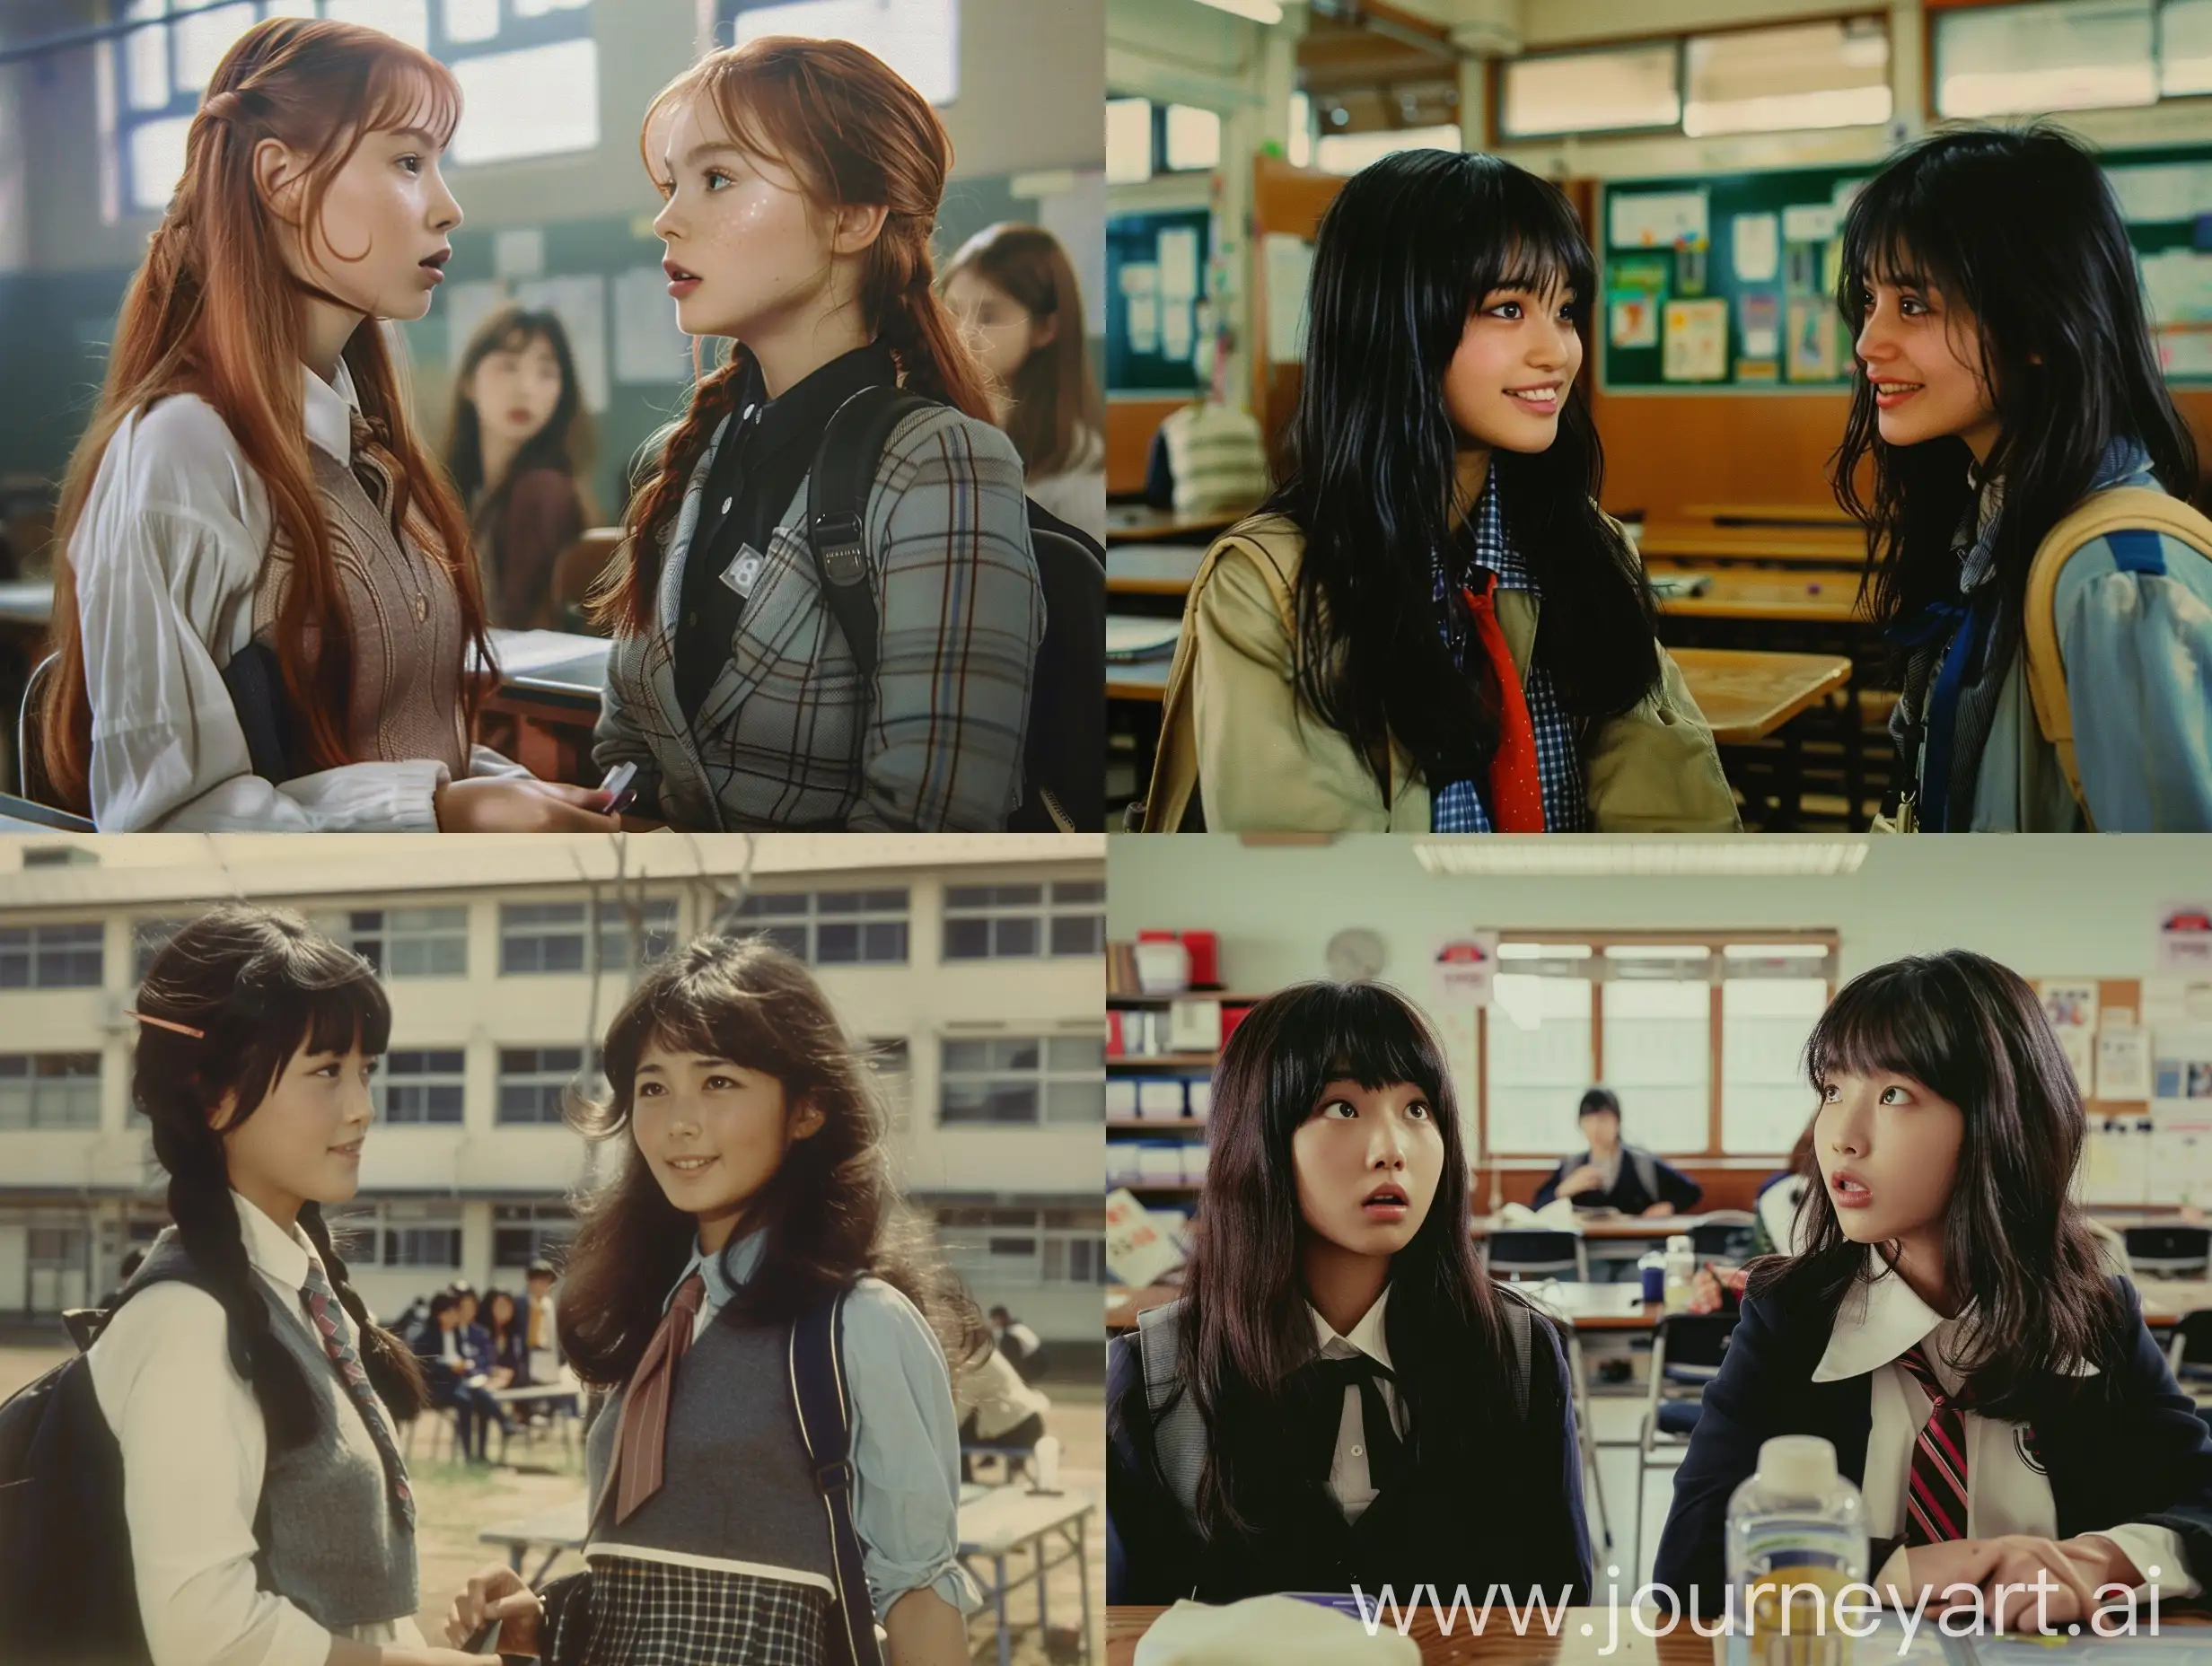 Schoolgirls-Chatting-in-Classroom-Scene-from-Movie